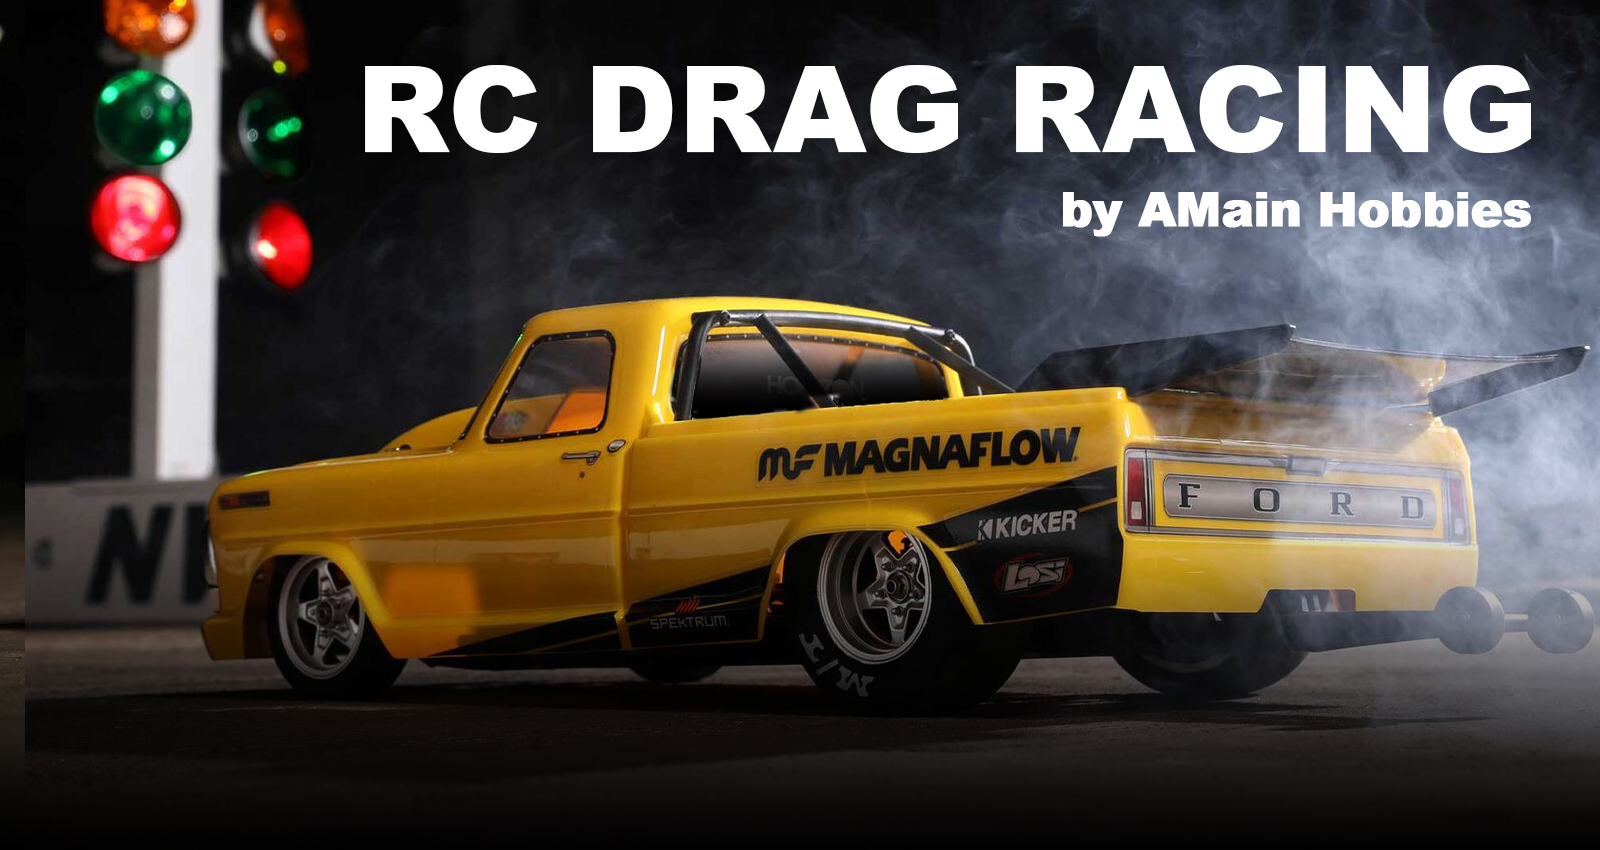 RC Drag Race Cars and Trucks